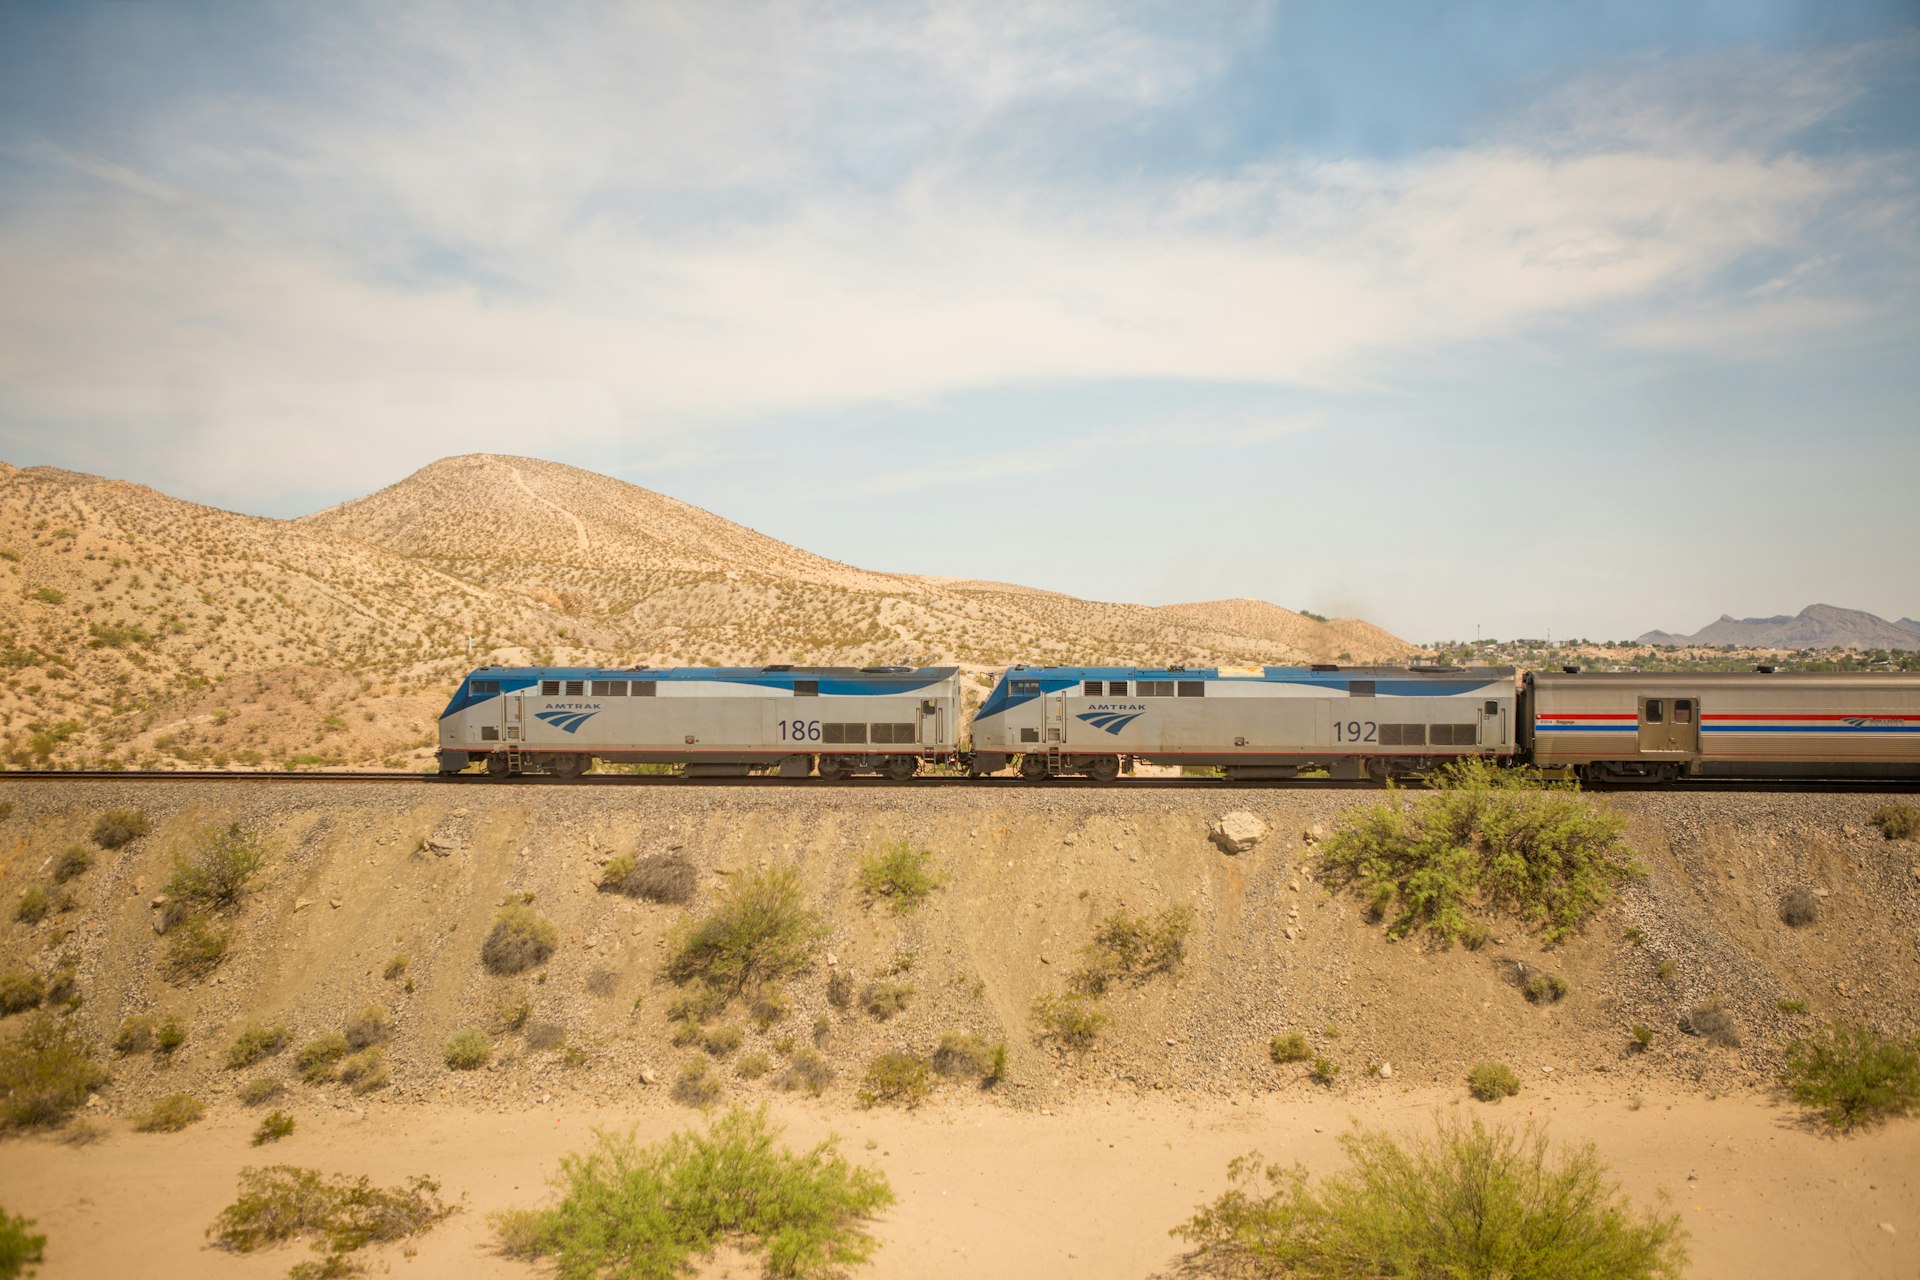 A train crossing a desert-like area